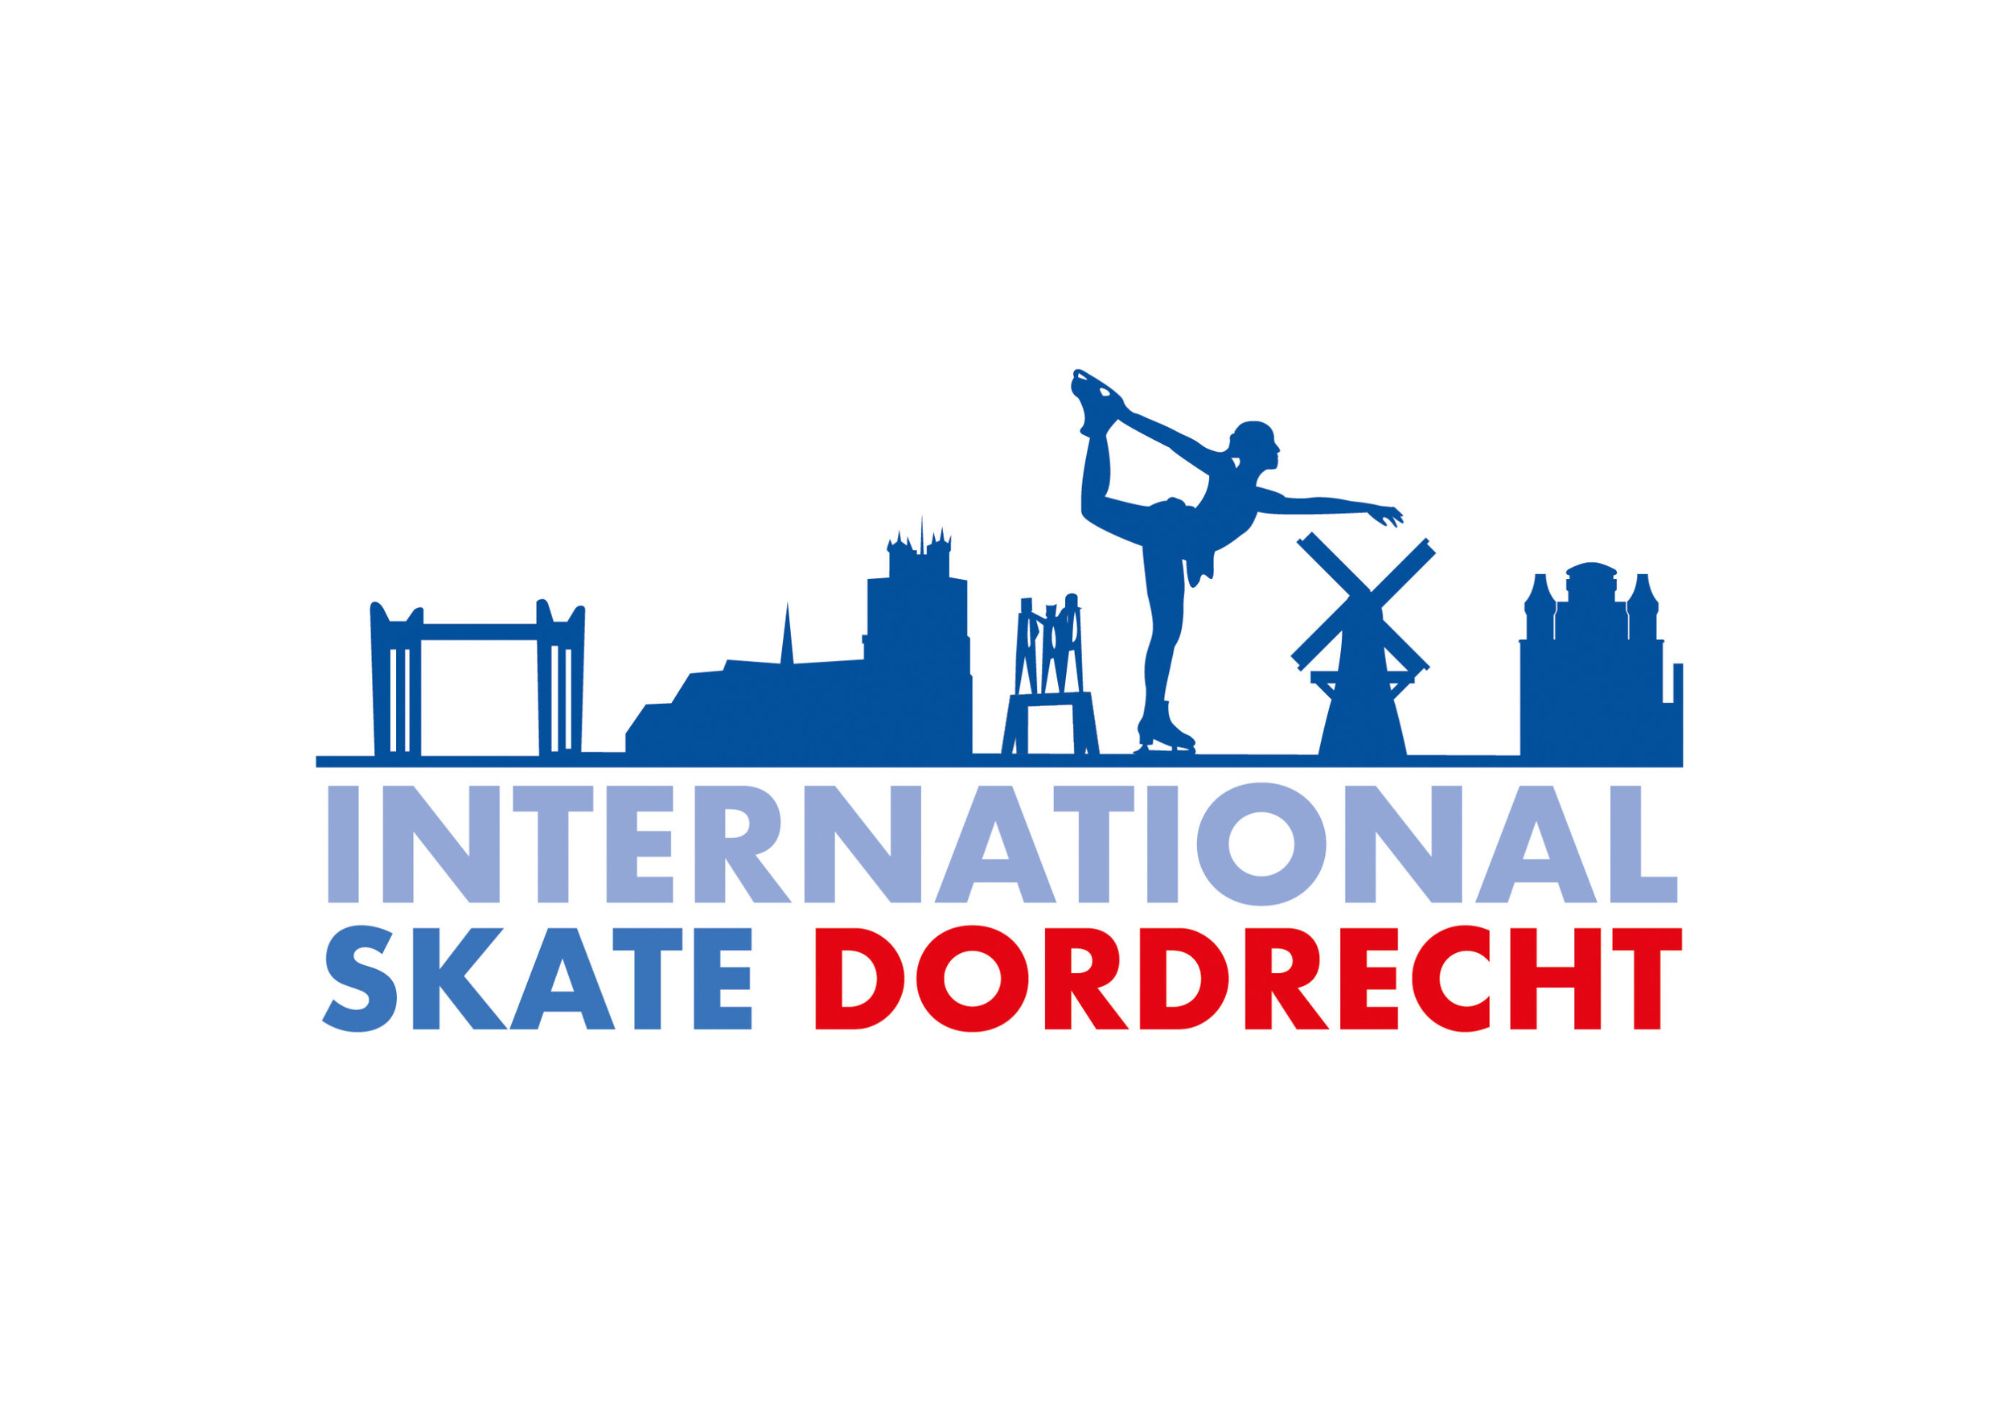 Titel International Skate Dordrecht Video